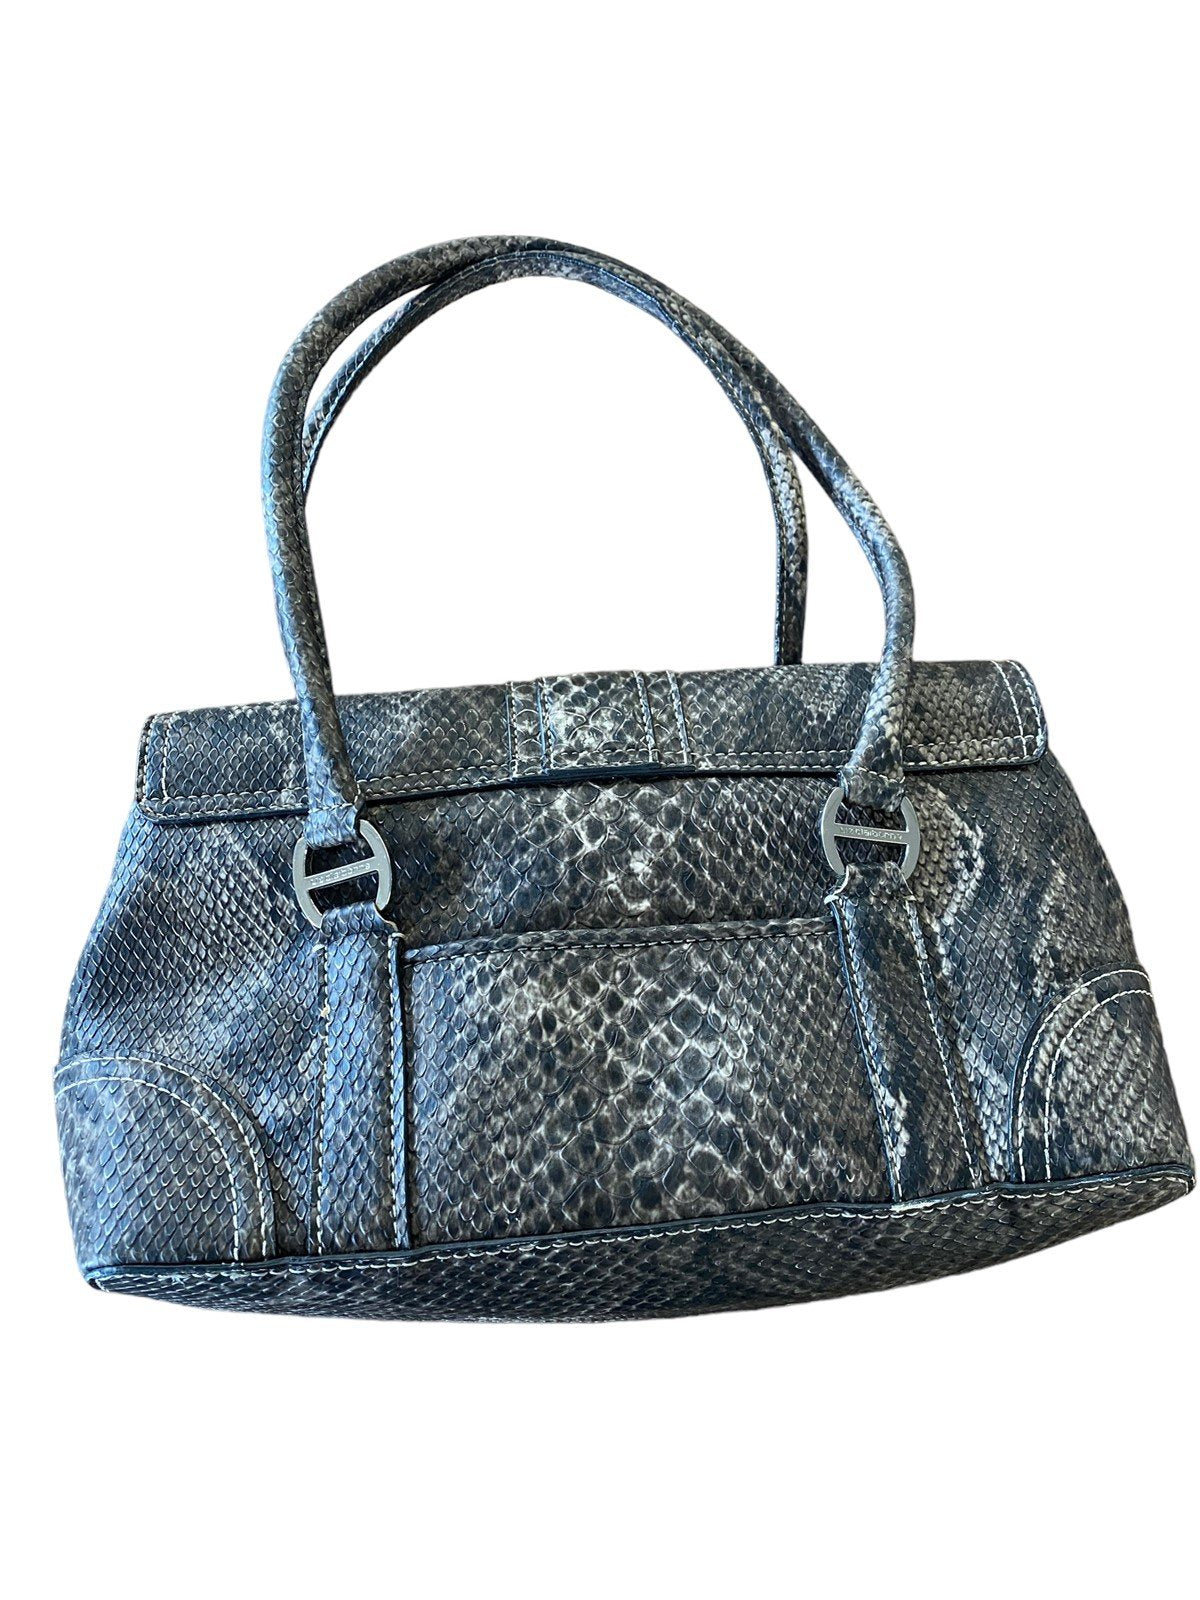 Liz Claiborne | Bags | Liz Claiborne Brown Leather Purse | Poshmark